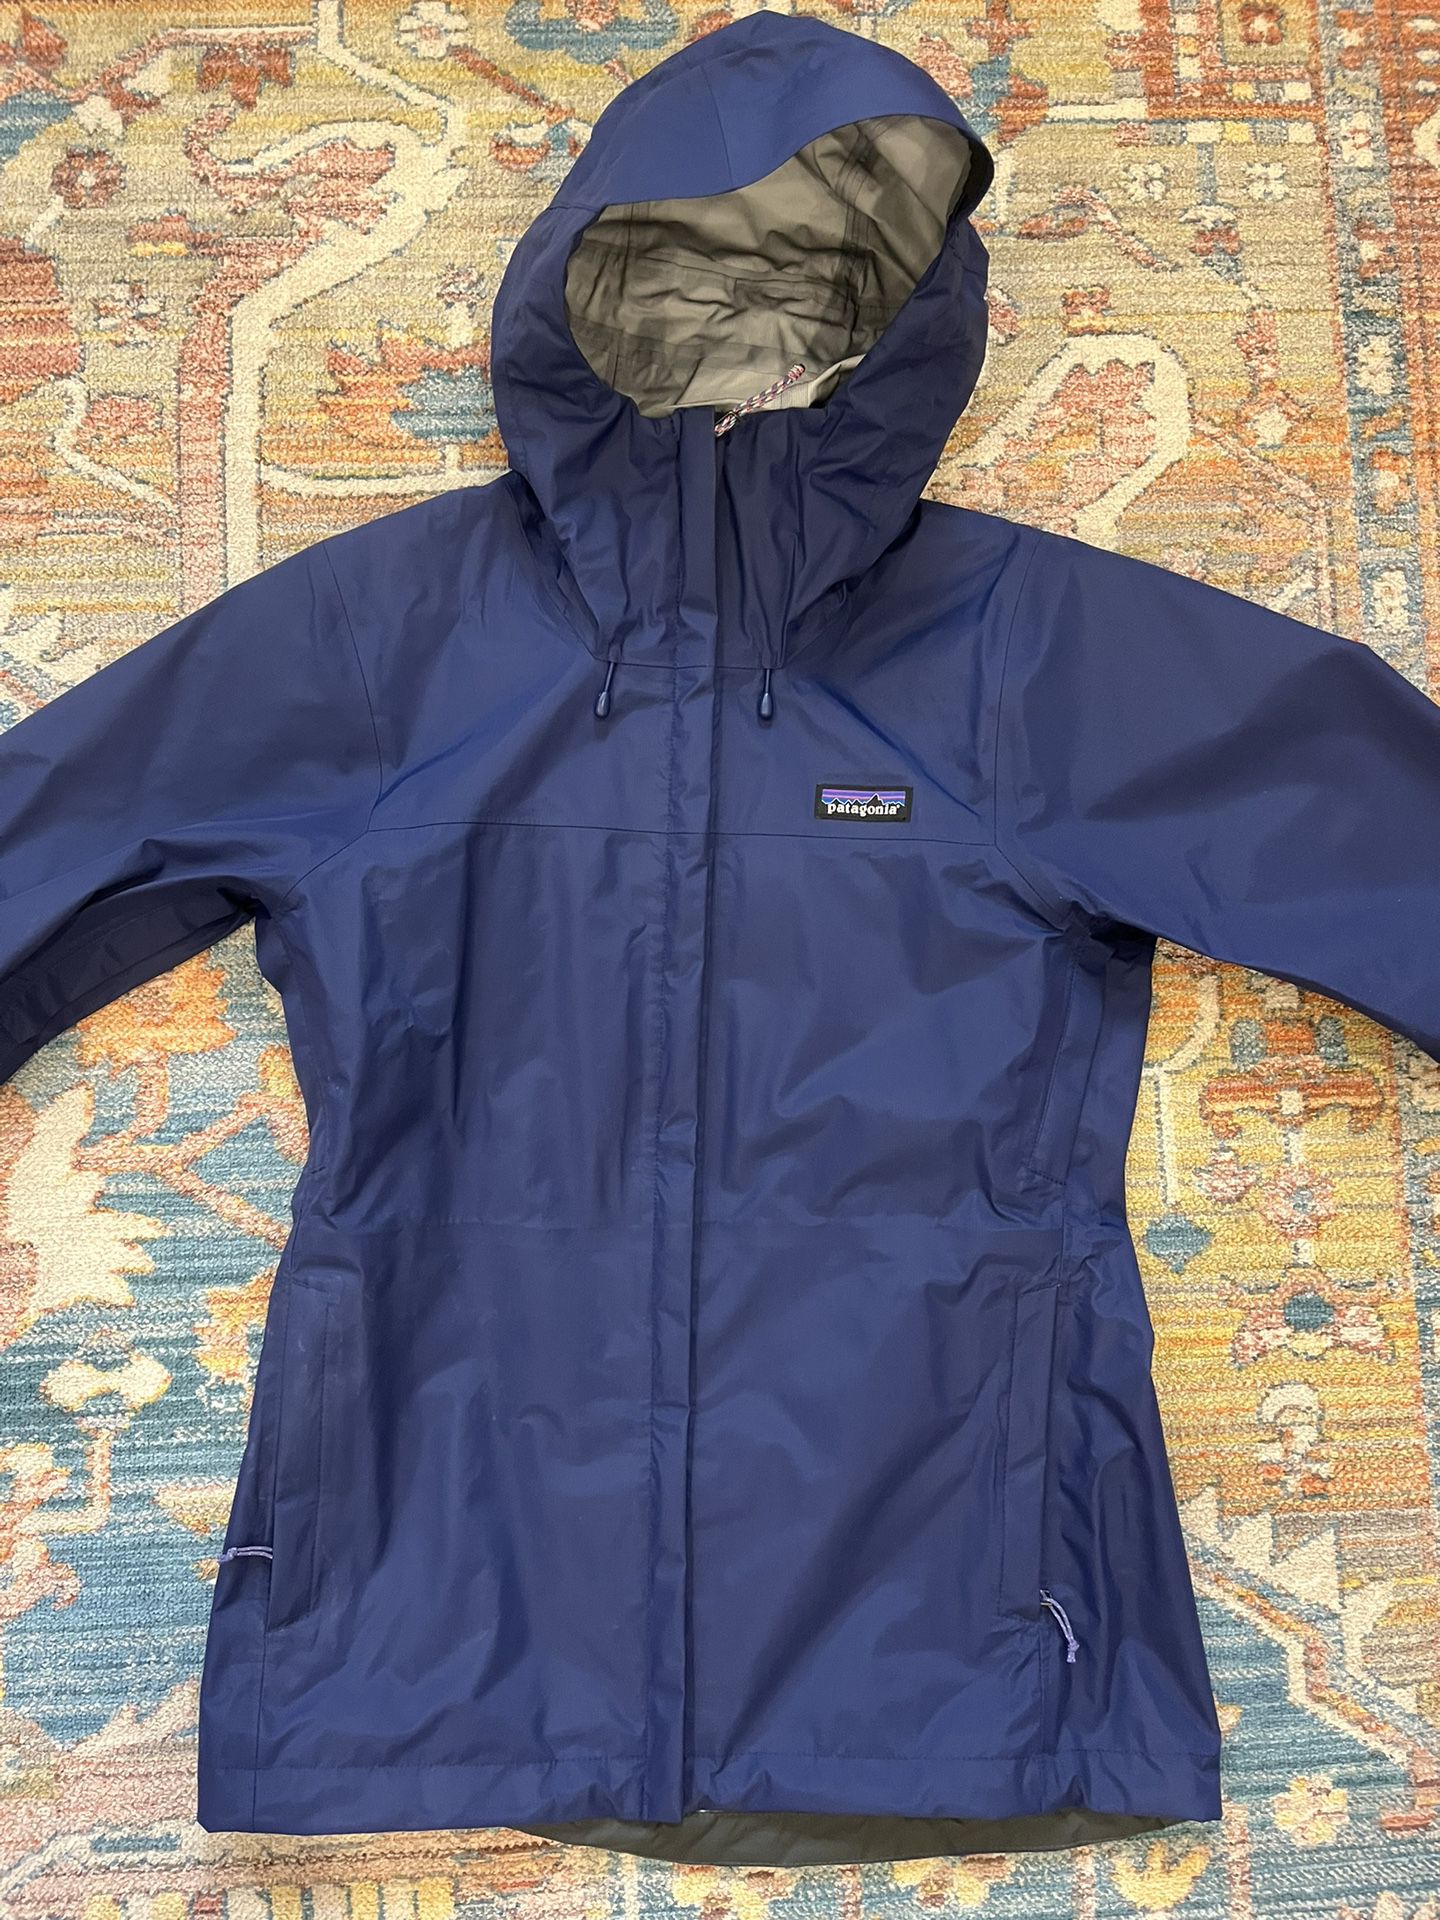 Patagonia Women’s XS Rain jacket - Like New 